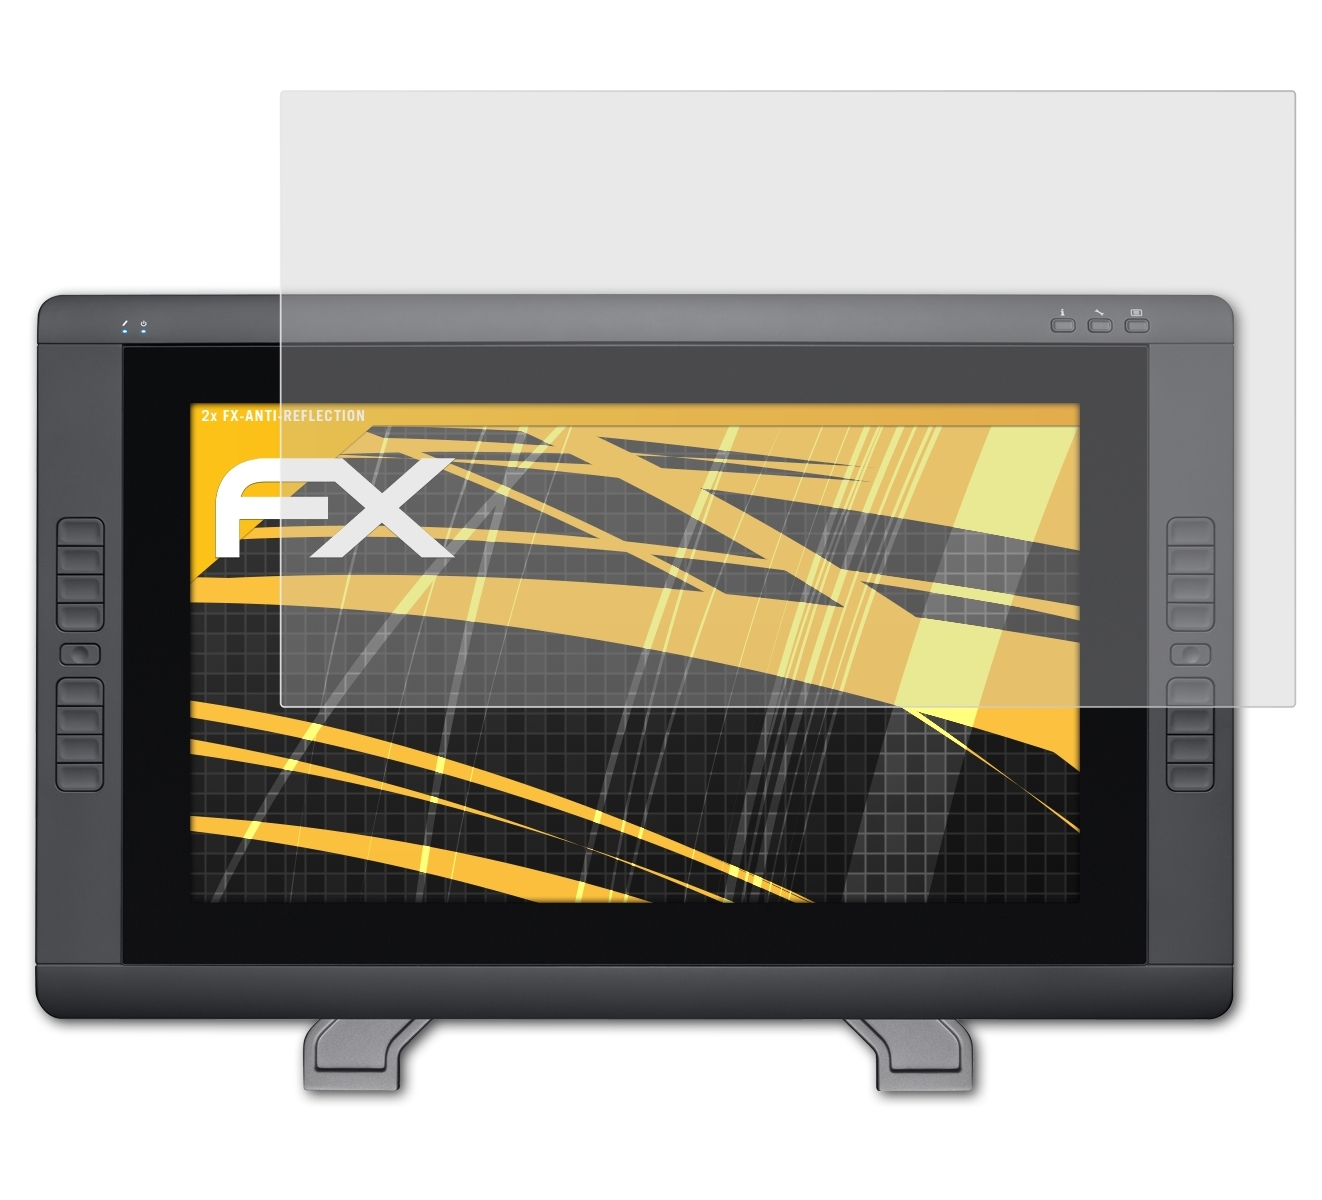 2x FX-Antireflex ATFOLIX 22 HD) CINTIQ Wacom Displayschutz(für